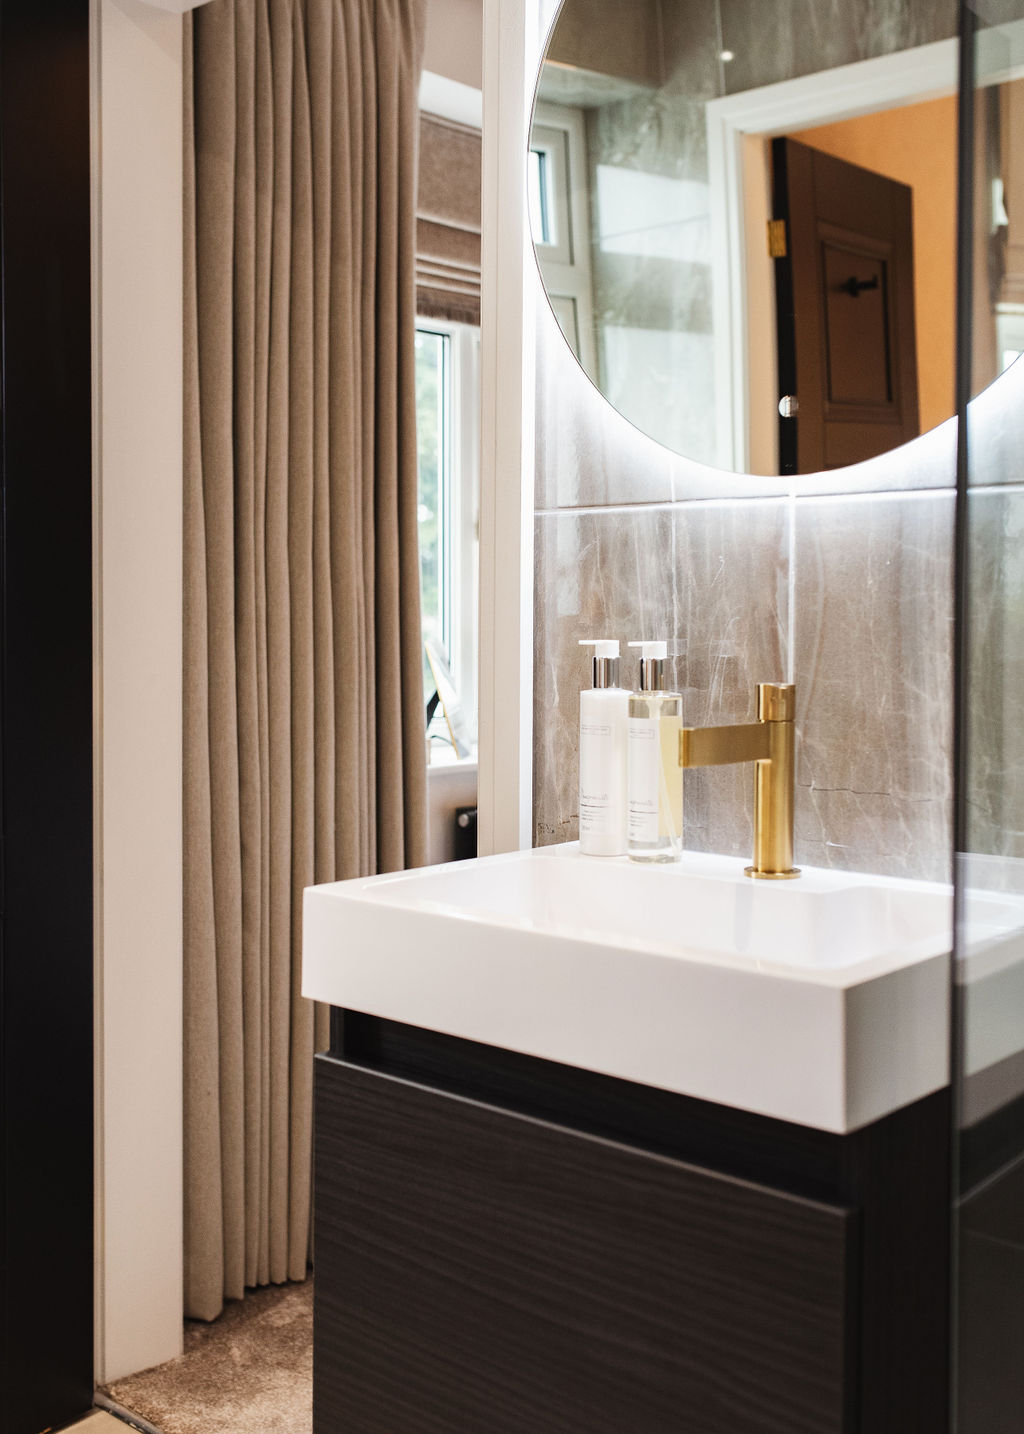 en suite bathroom interior with vanity sink and round mirror